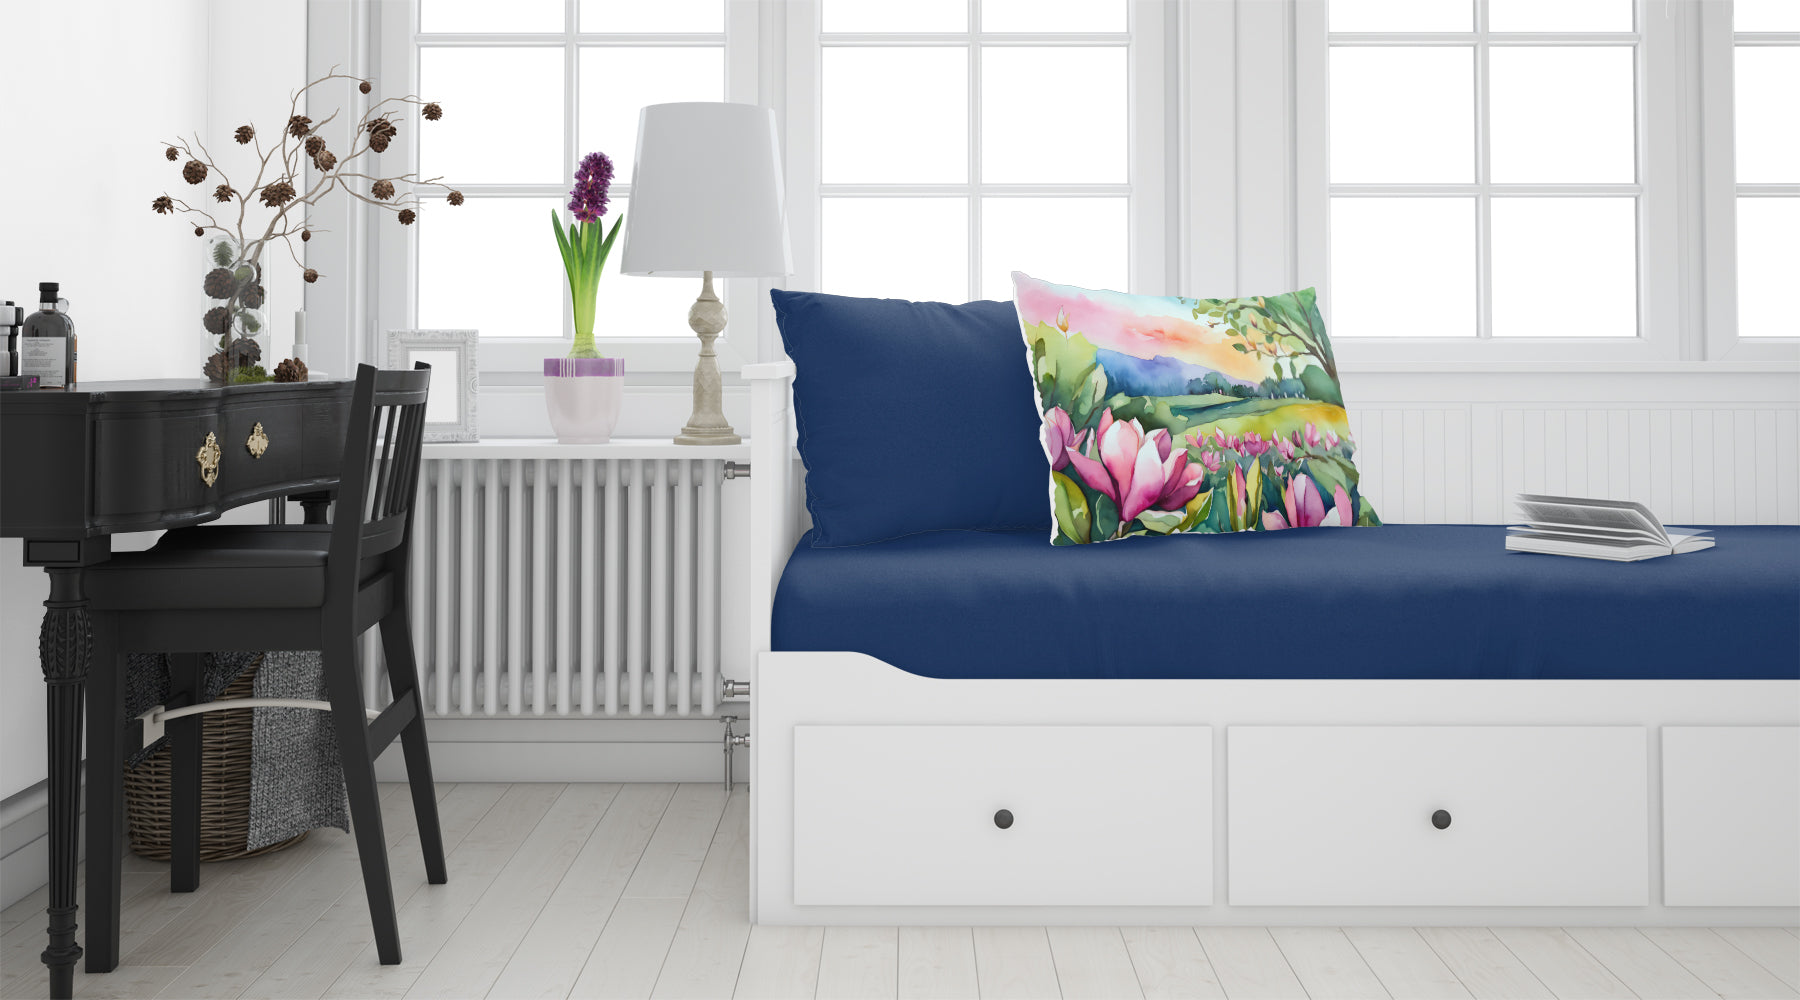 Buy this Louisiana Magnolias in Watercolor Fabric Standard Pillowcase